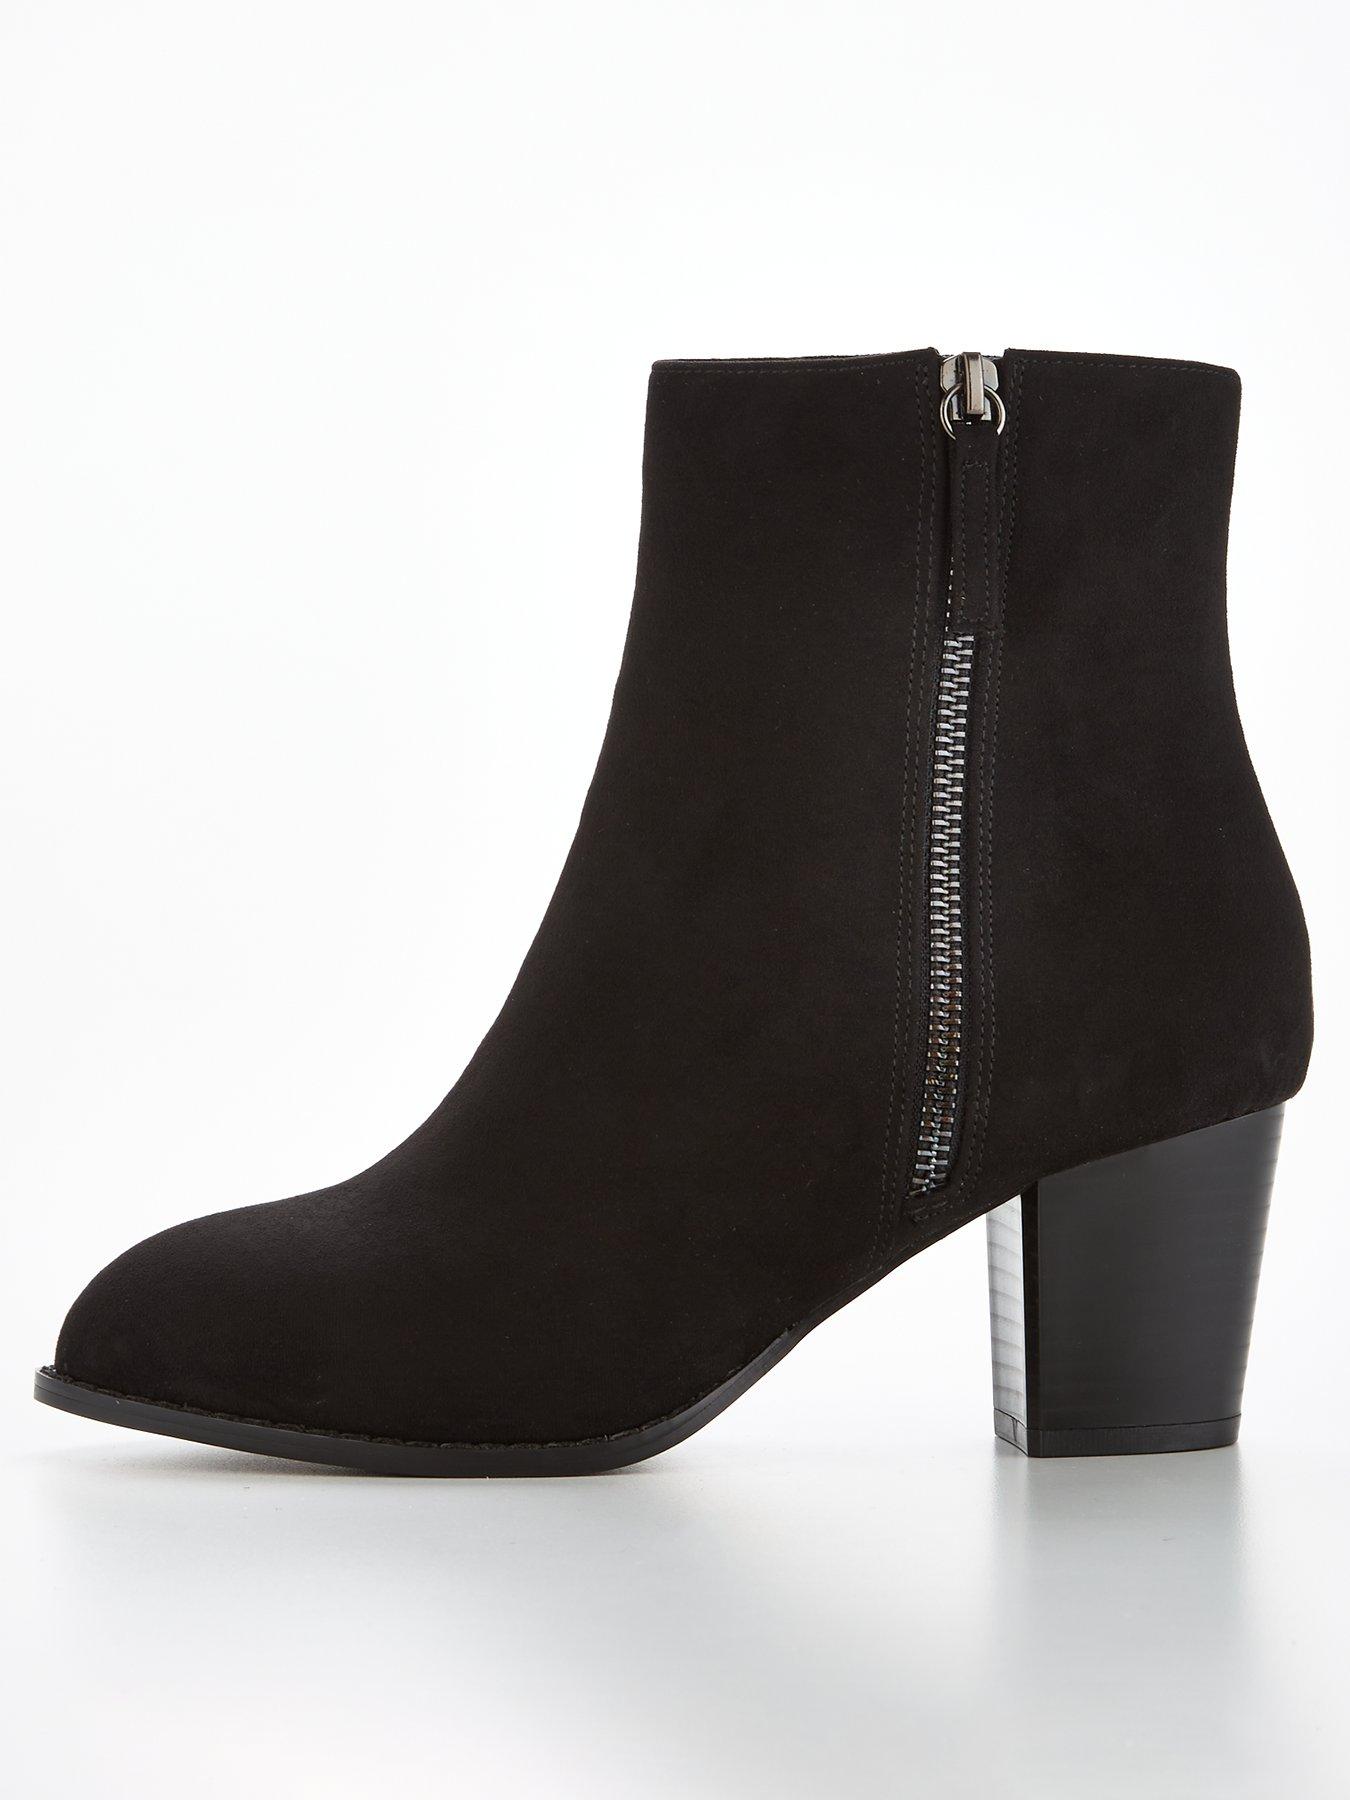 Unze ladies boots | Leather boots women, Womens boots, Shoes women heels